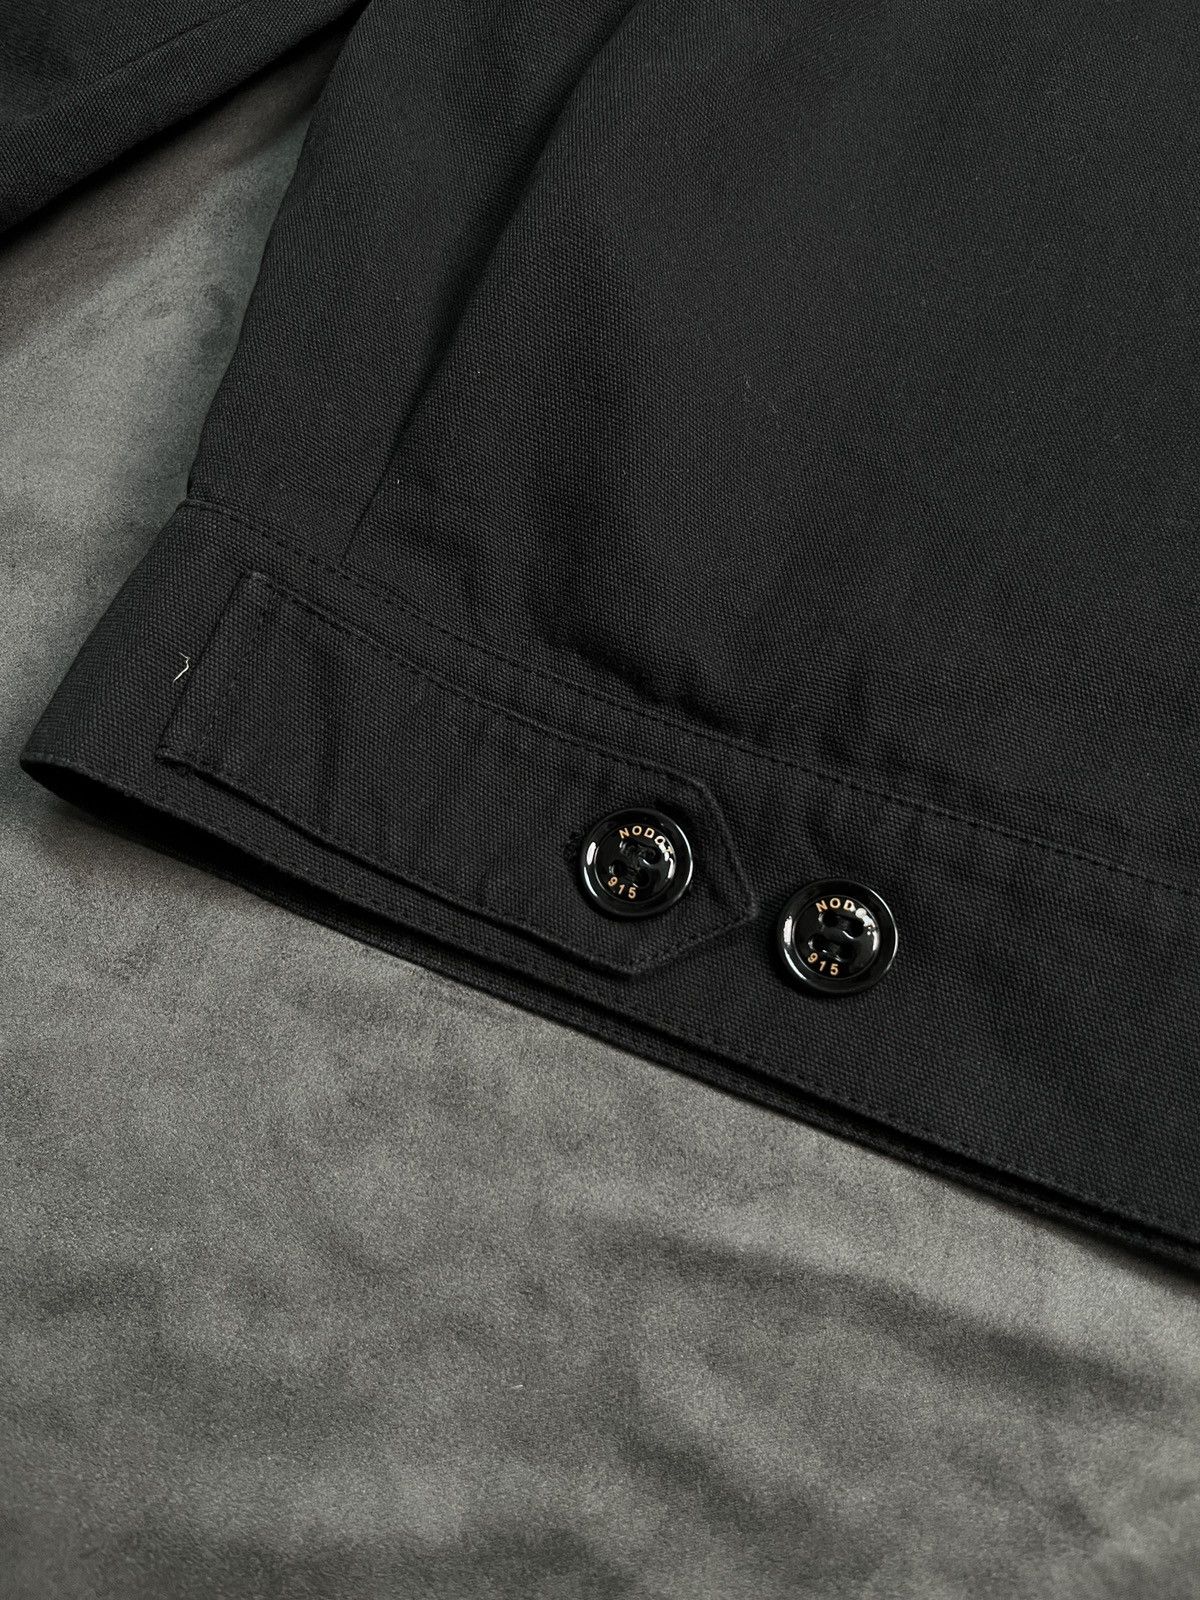 Hype - Nodot Y2k Two Way Zipper Black Workwear Jacket Medium - 11